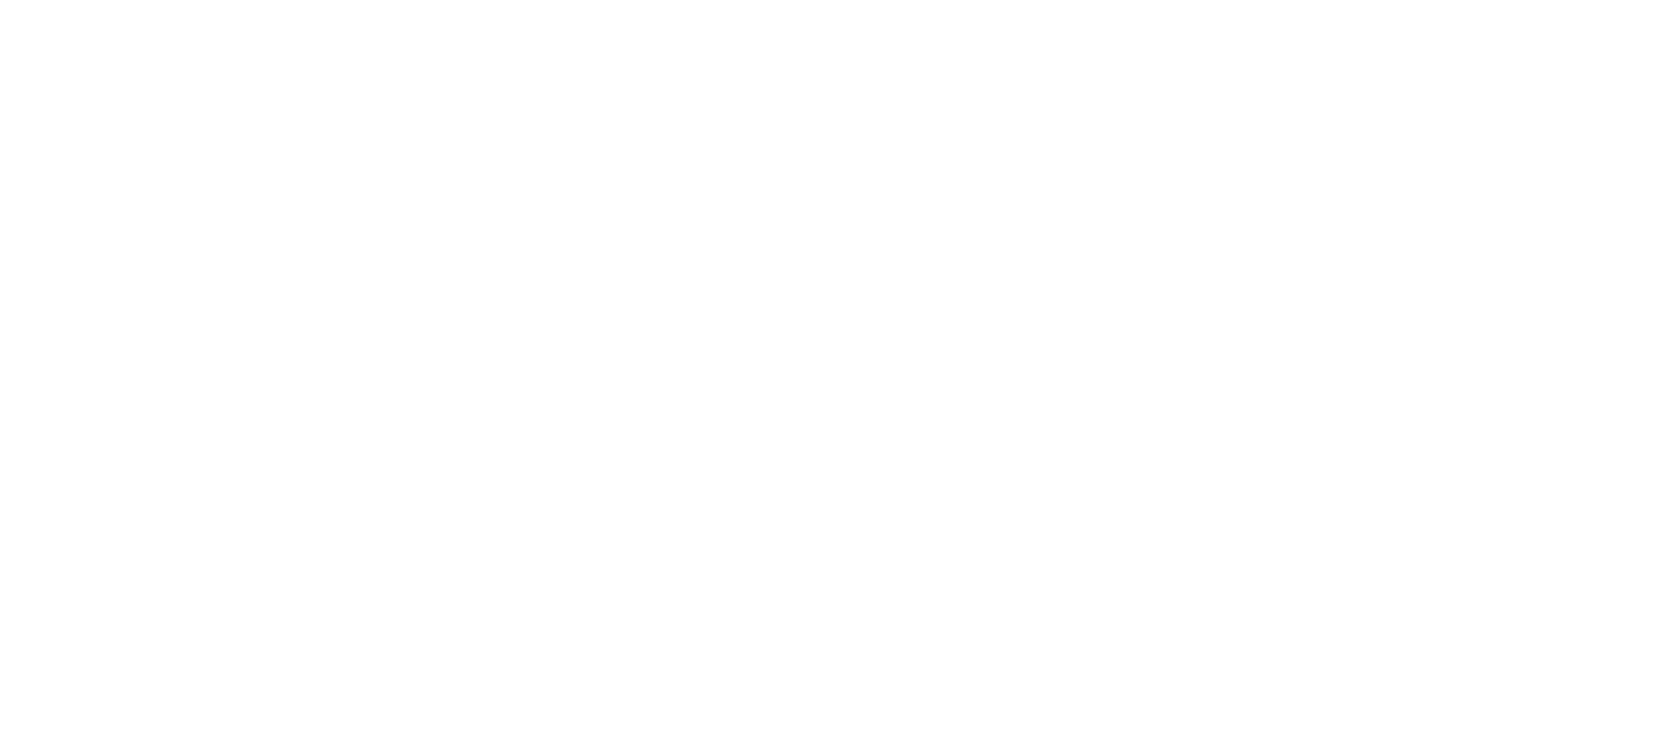 TN-Group